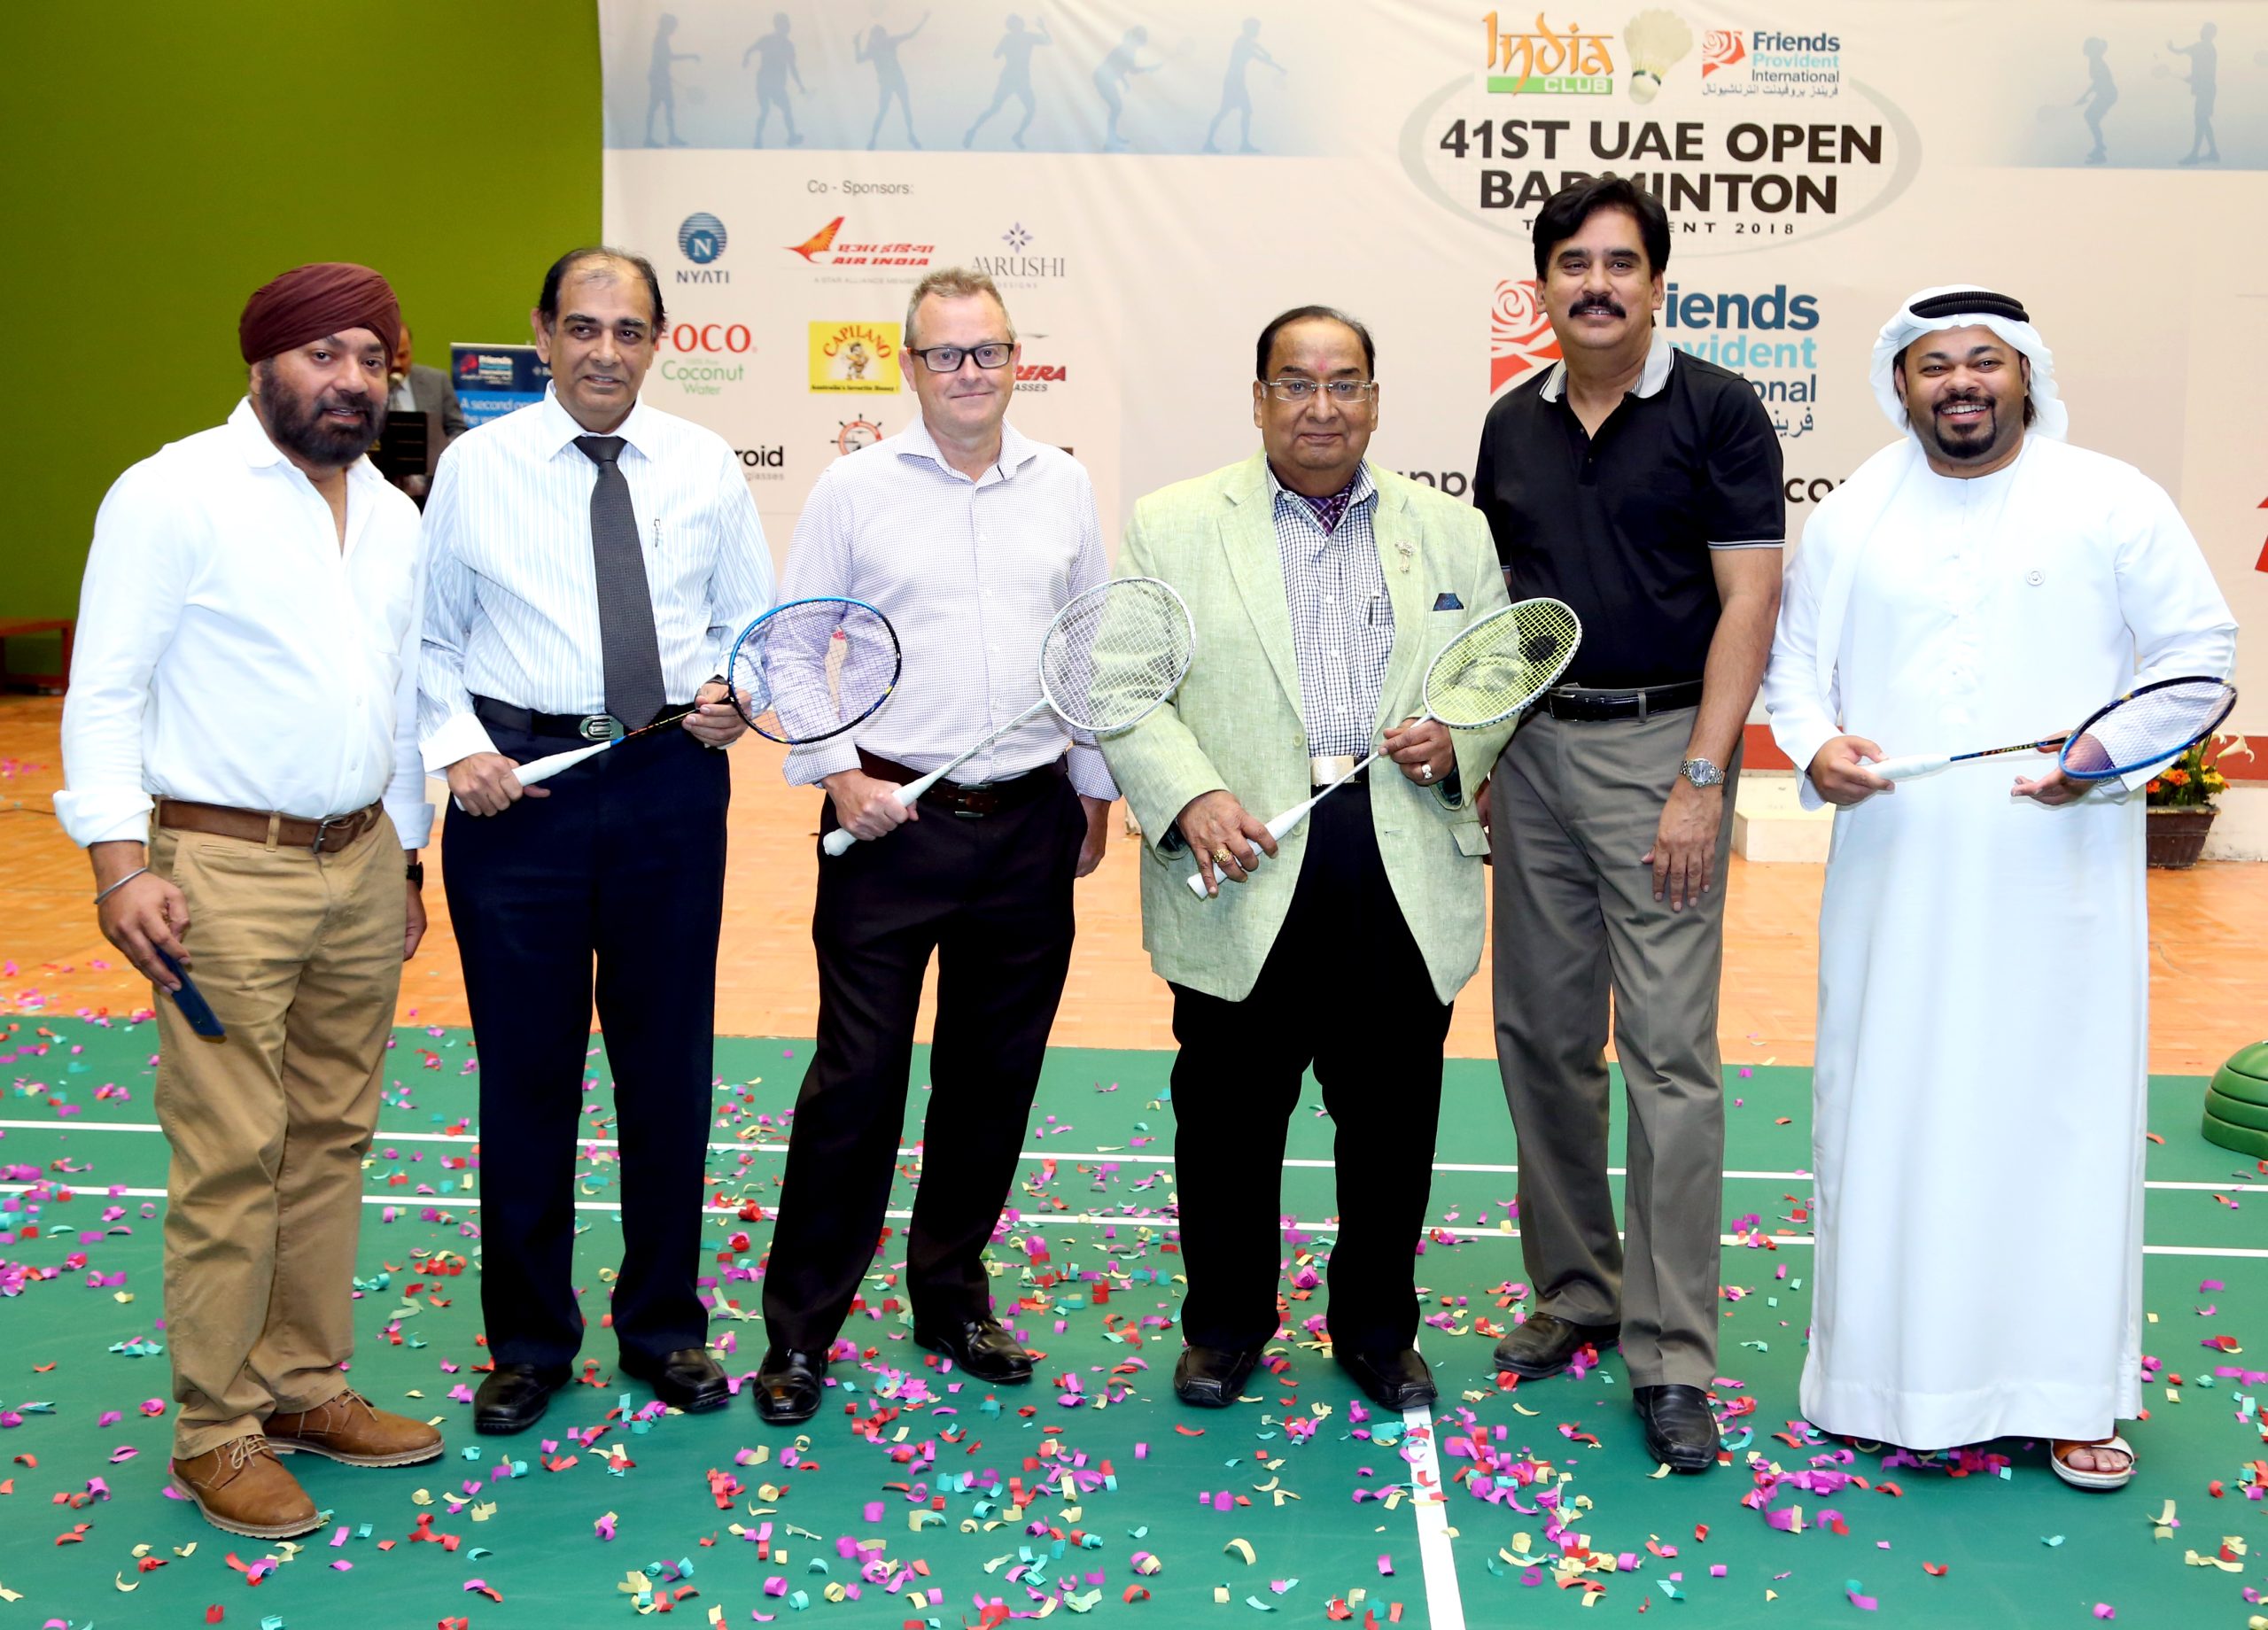 41st UAE Open Badminton Inauguration 2018